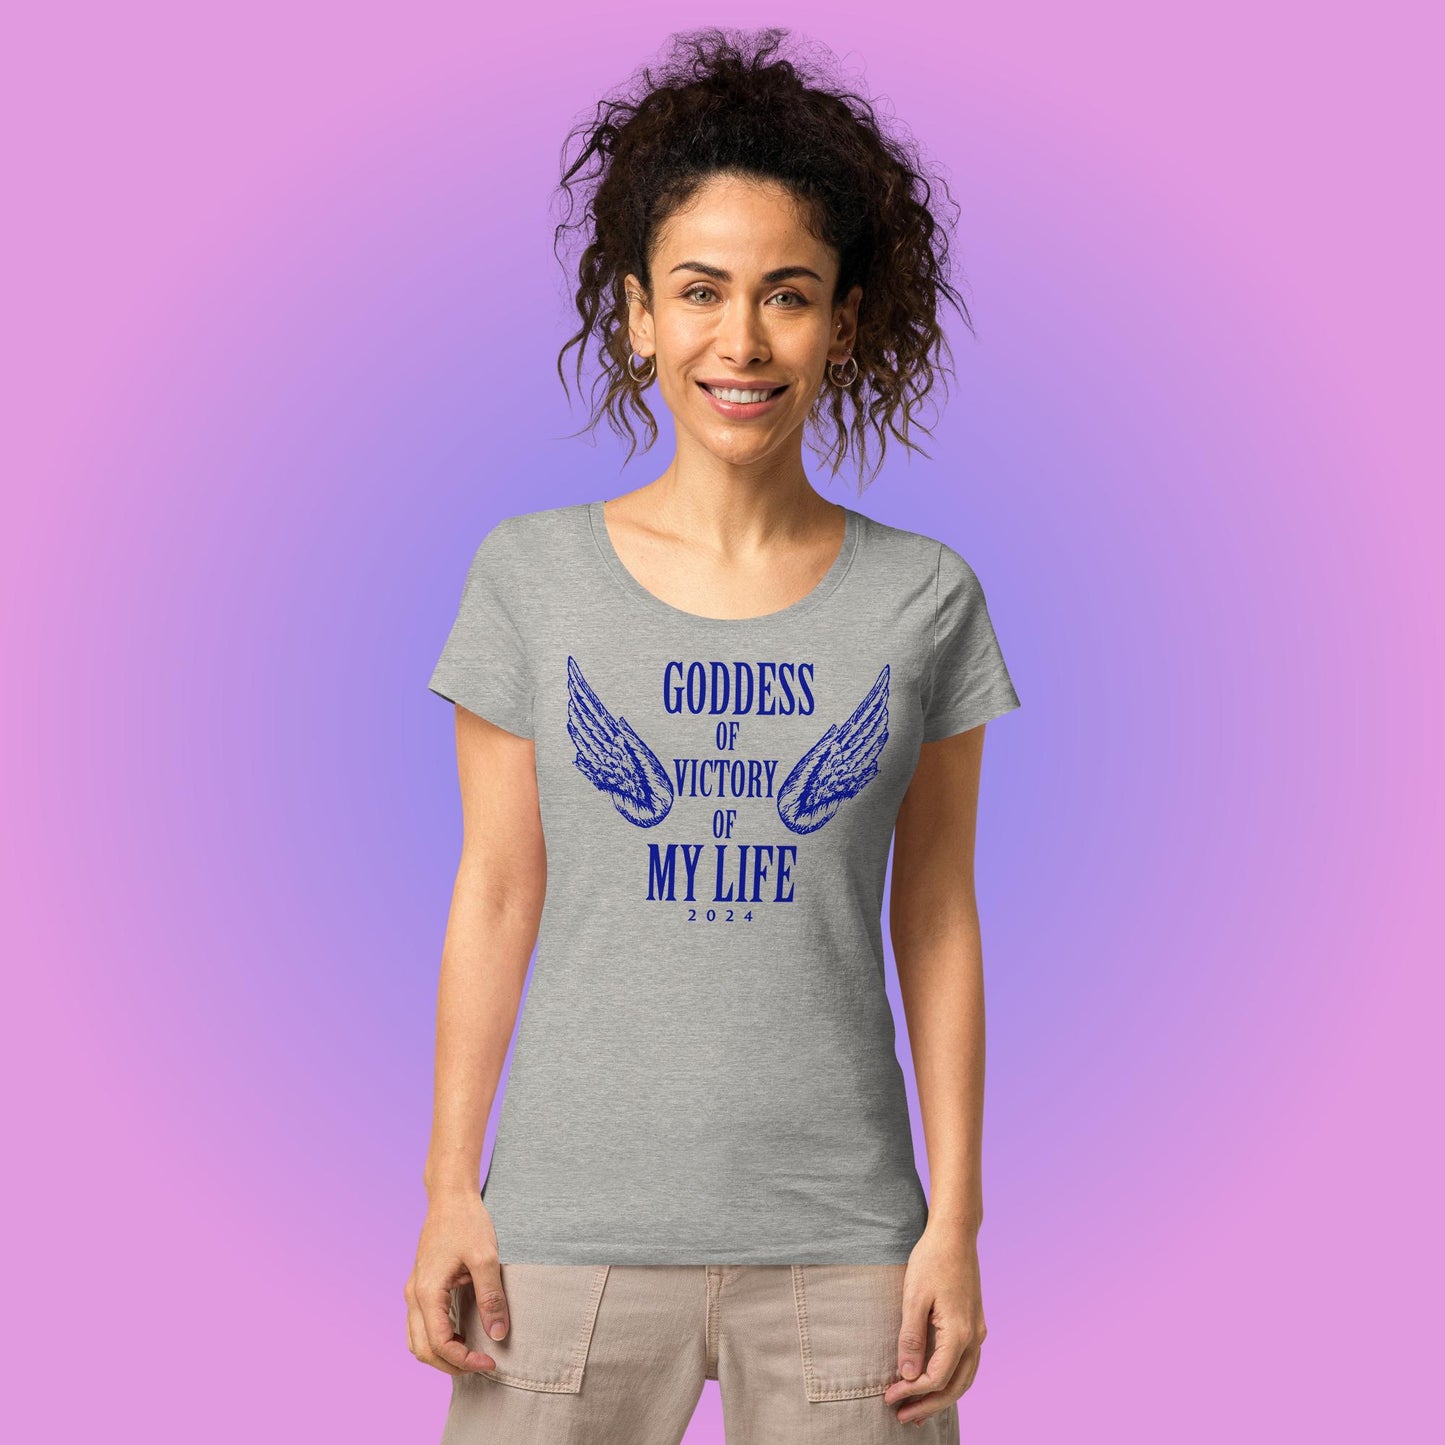 Goddess Of My Life 2024: Women’s basic organic t-shirt